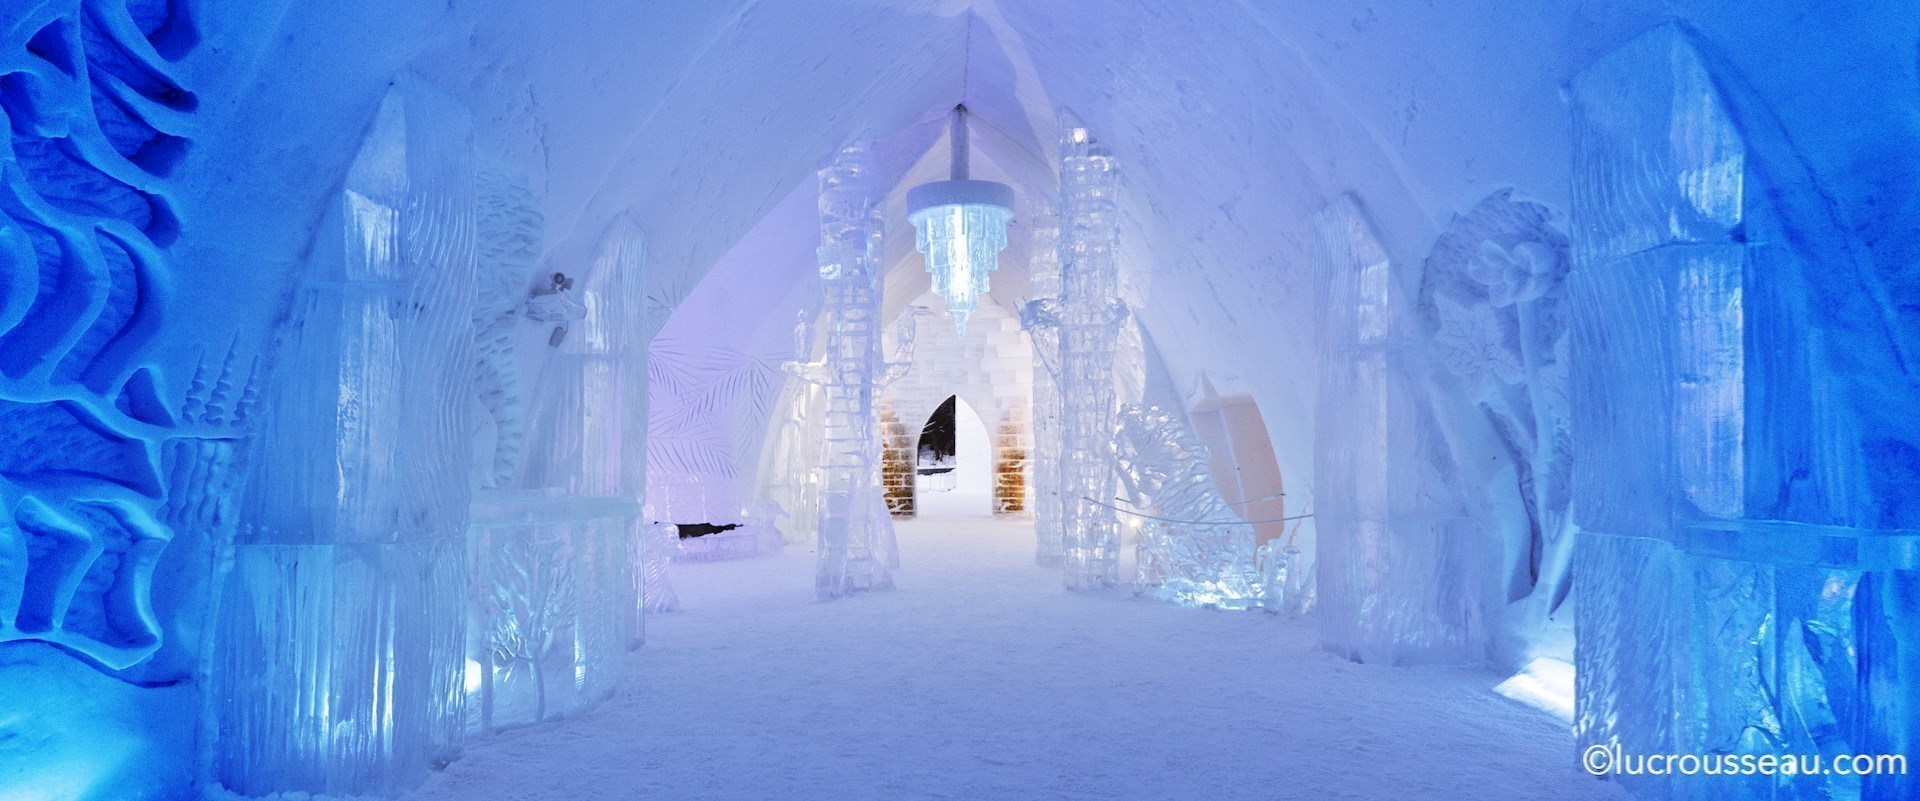 Ice Hotel Experience - 2022 / 2023 Quebec City Breaks